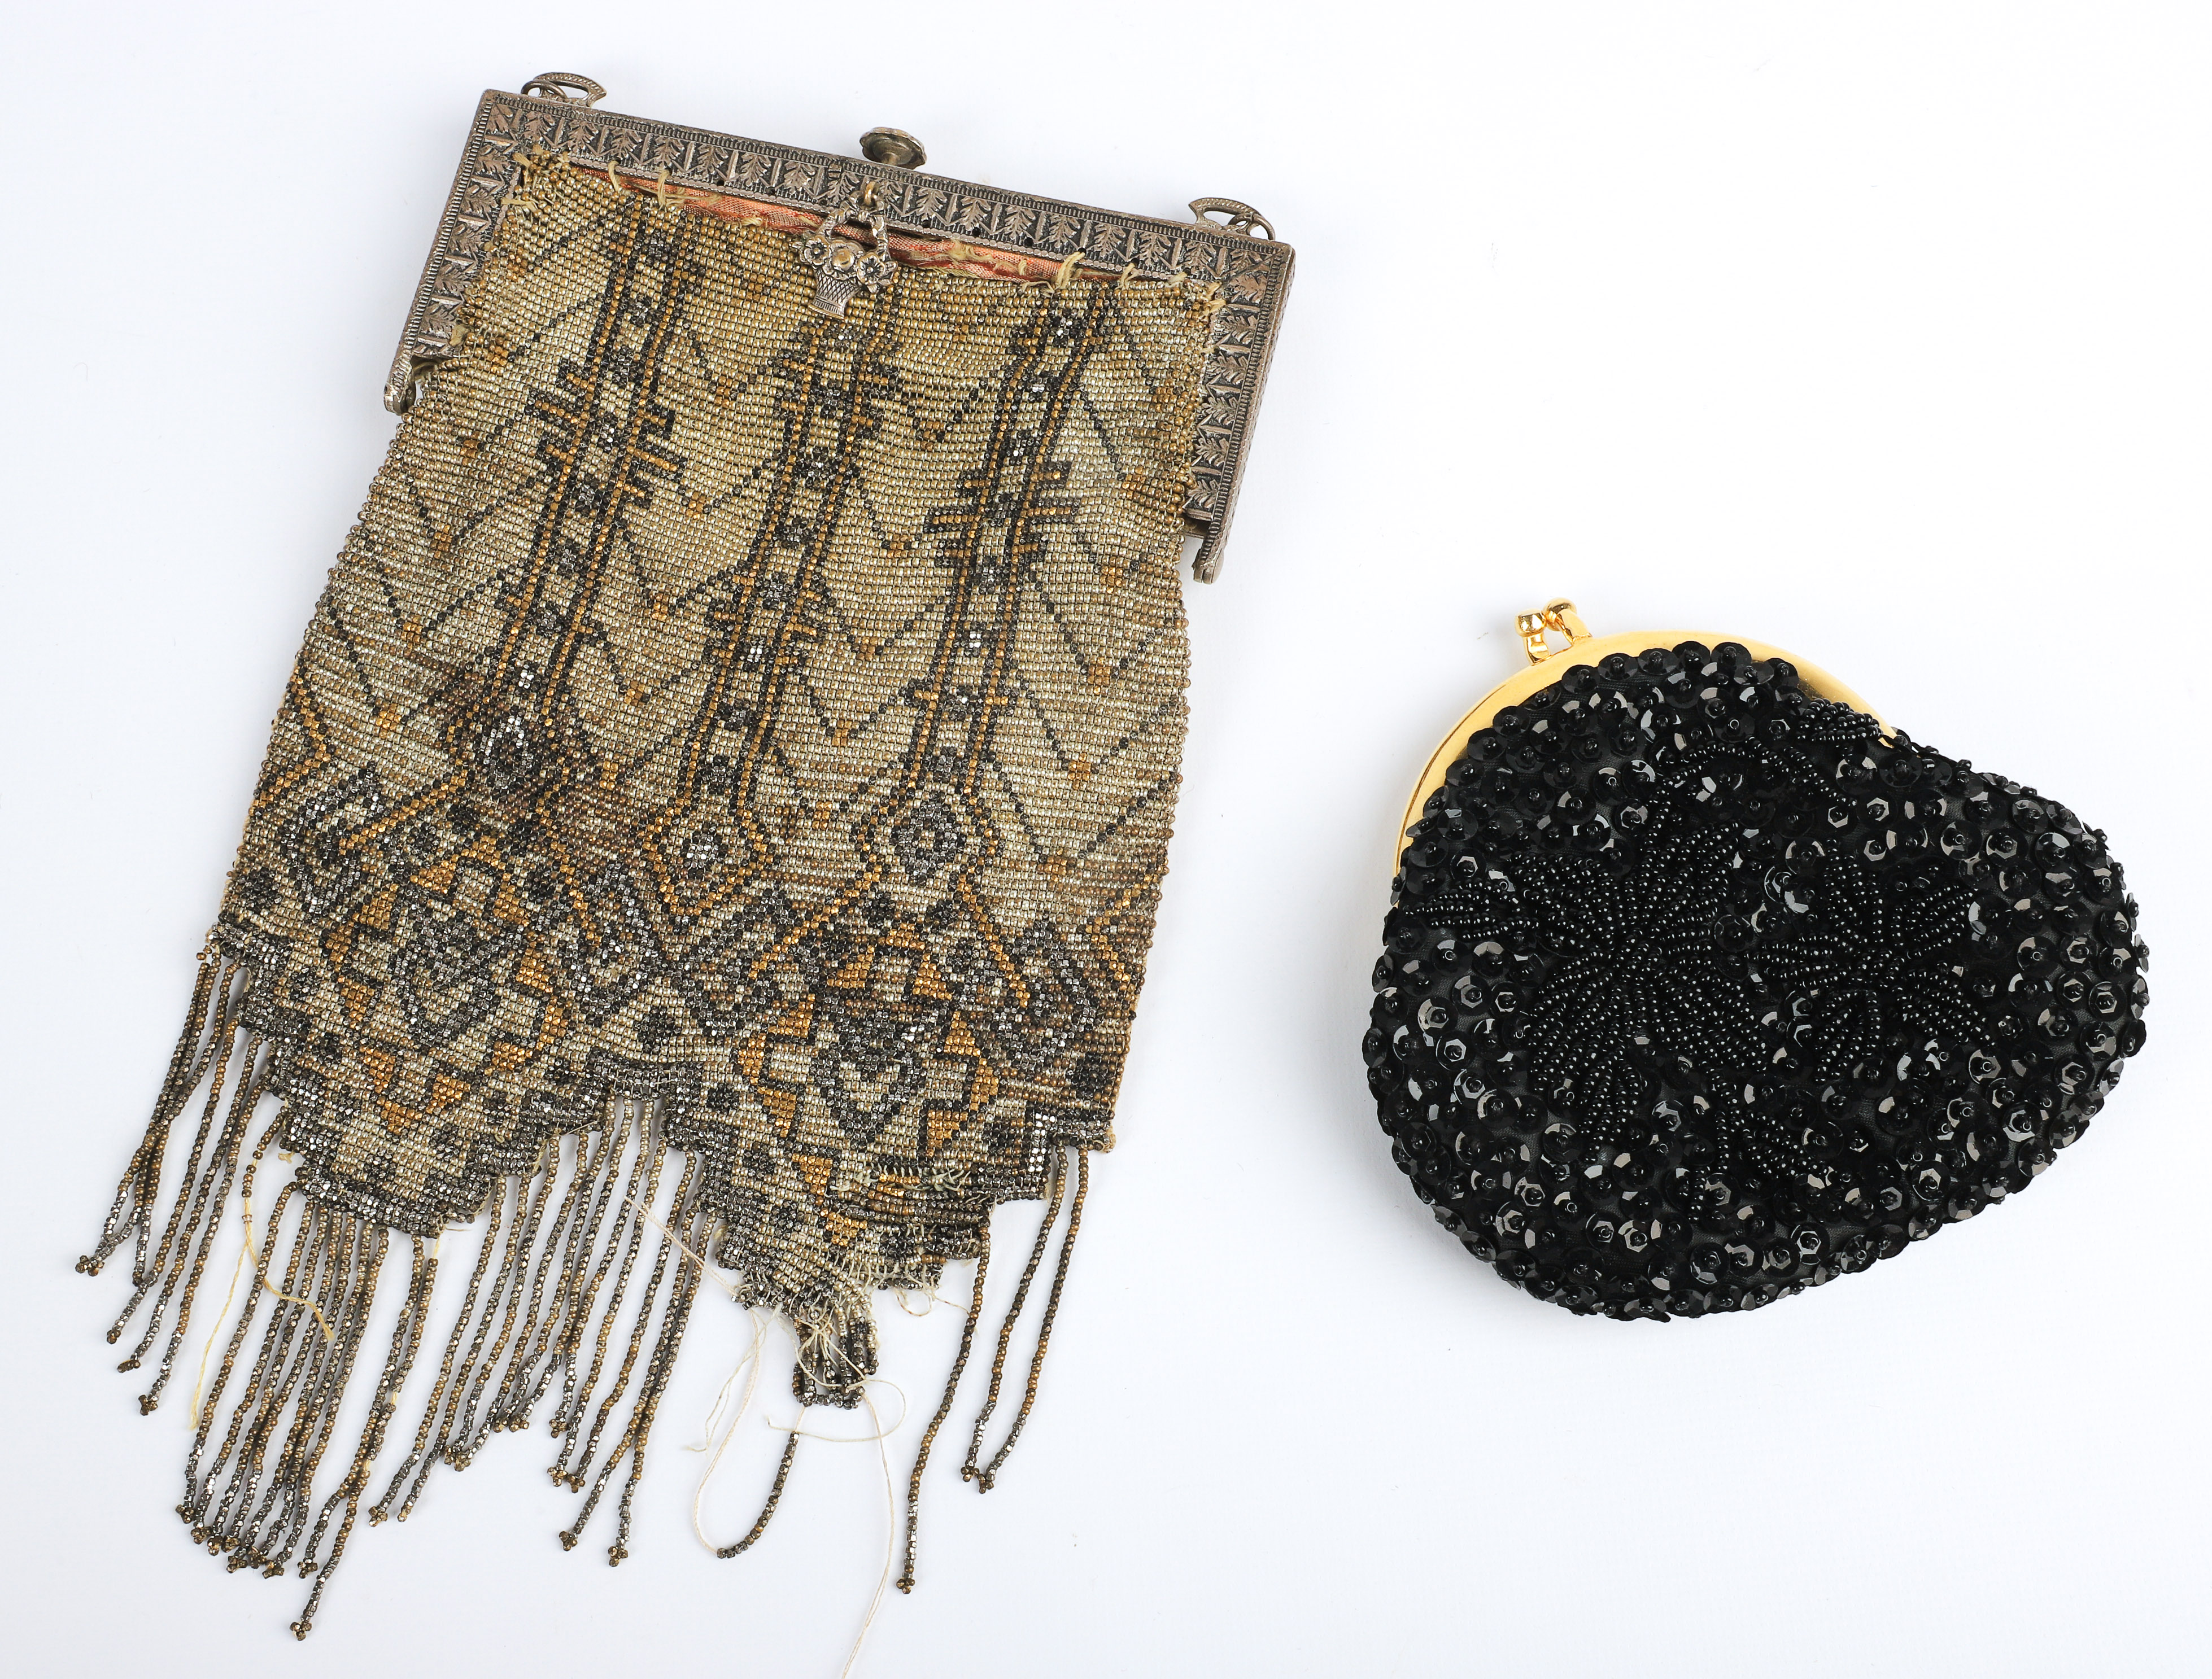 (2) Beaded purses, c/o Art Deco with